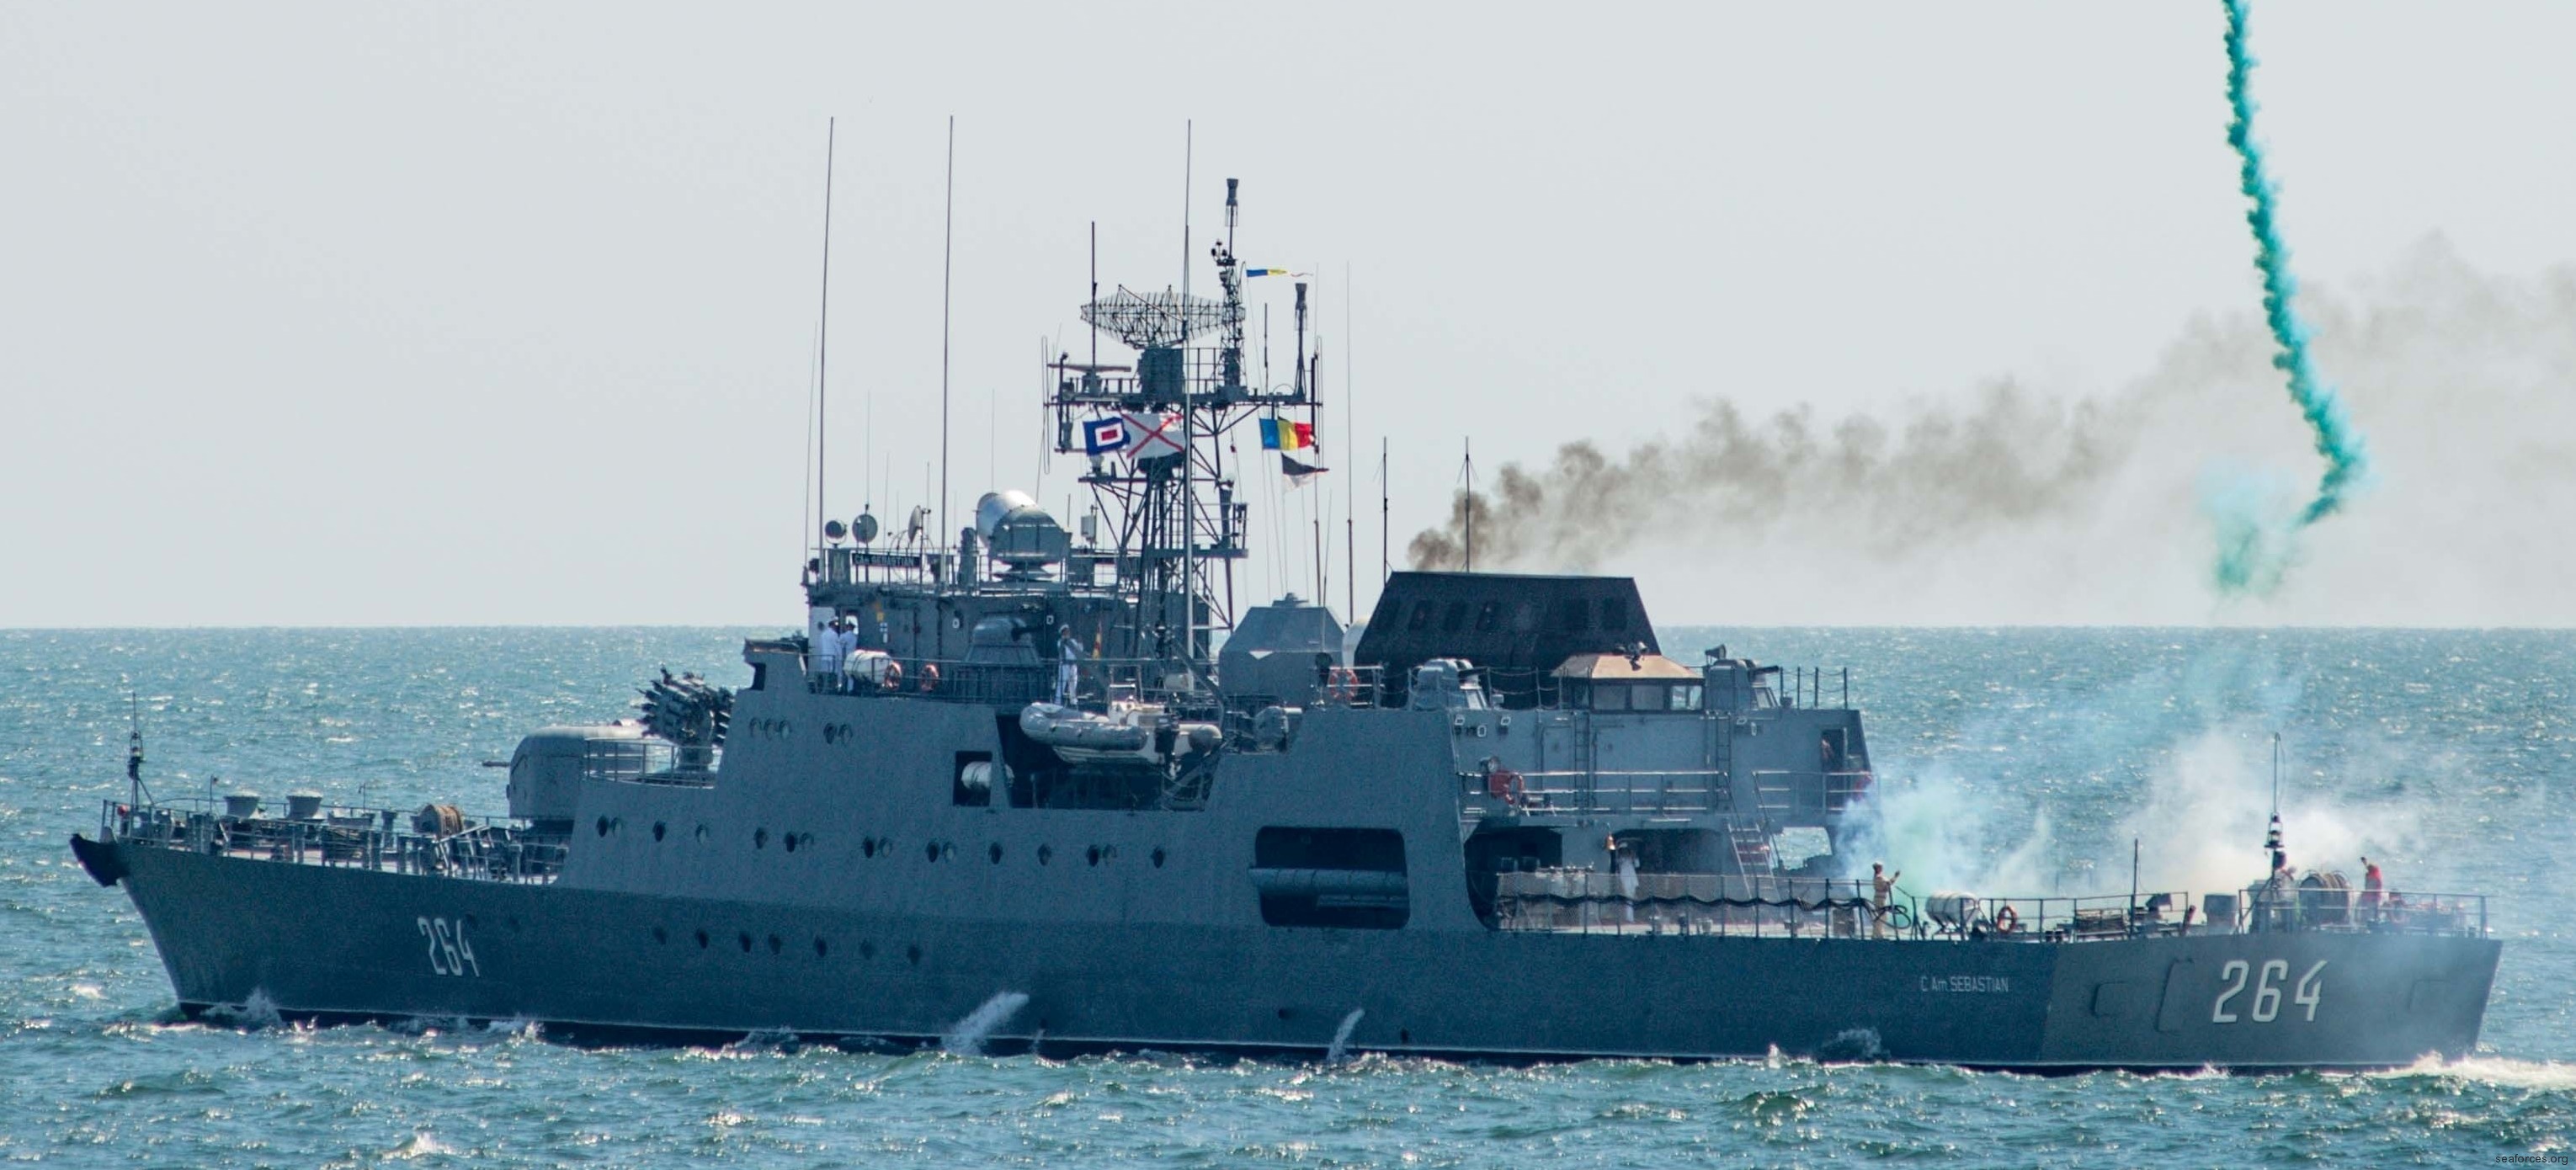 f-264 ros contraamiral eustatiu sebastian tetal-ii class corvette romanian navy 09